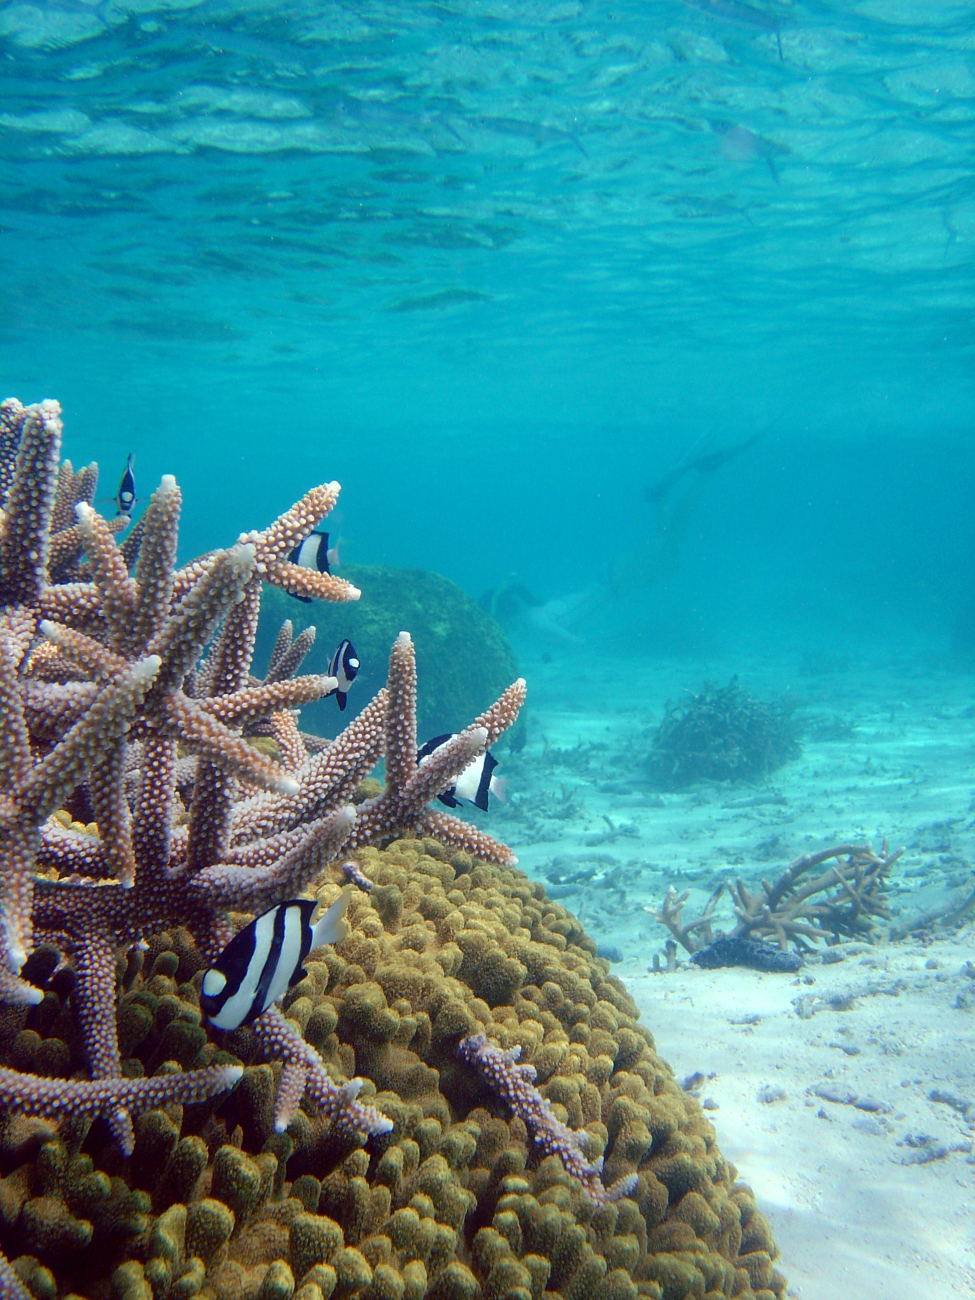 Reef scene with damselfish (Dascyllus aruanus) in foreground